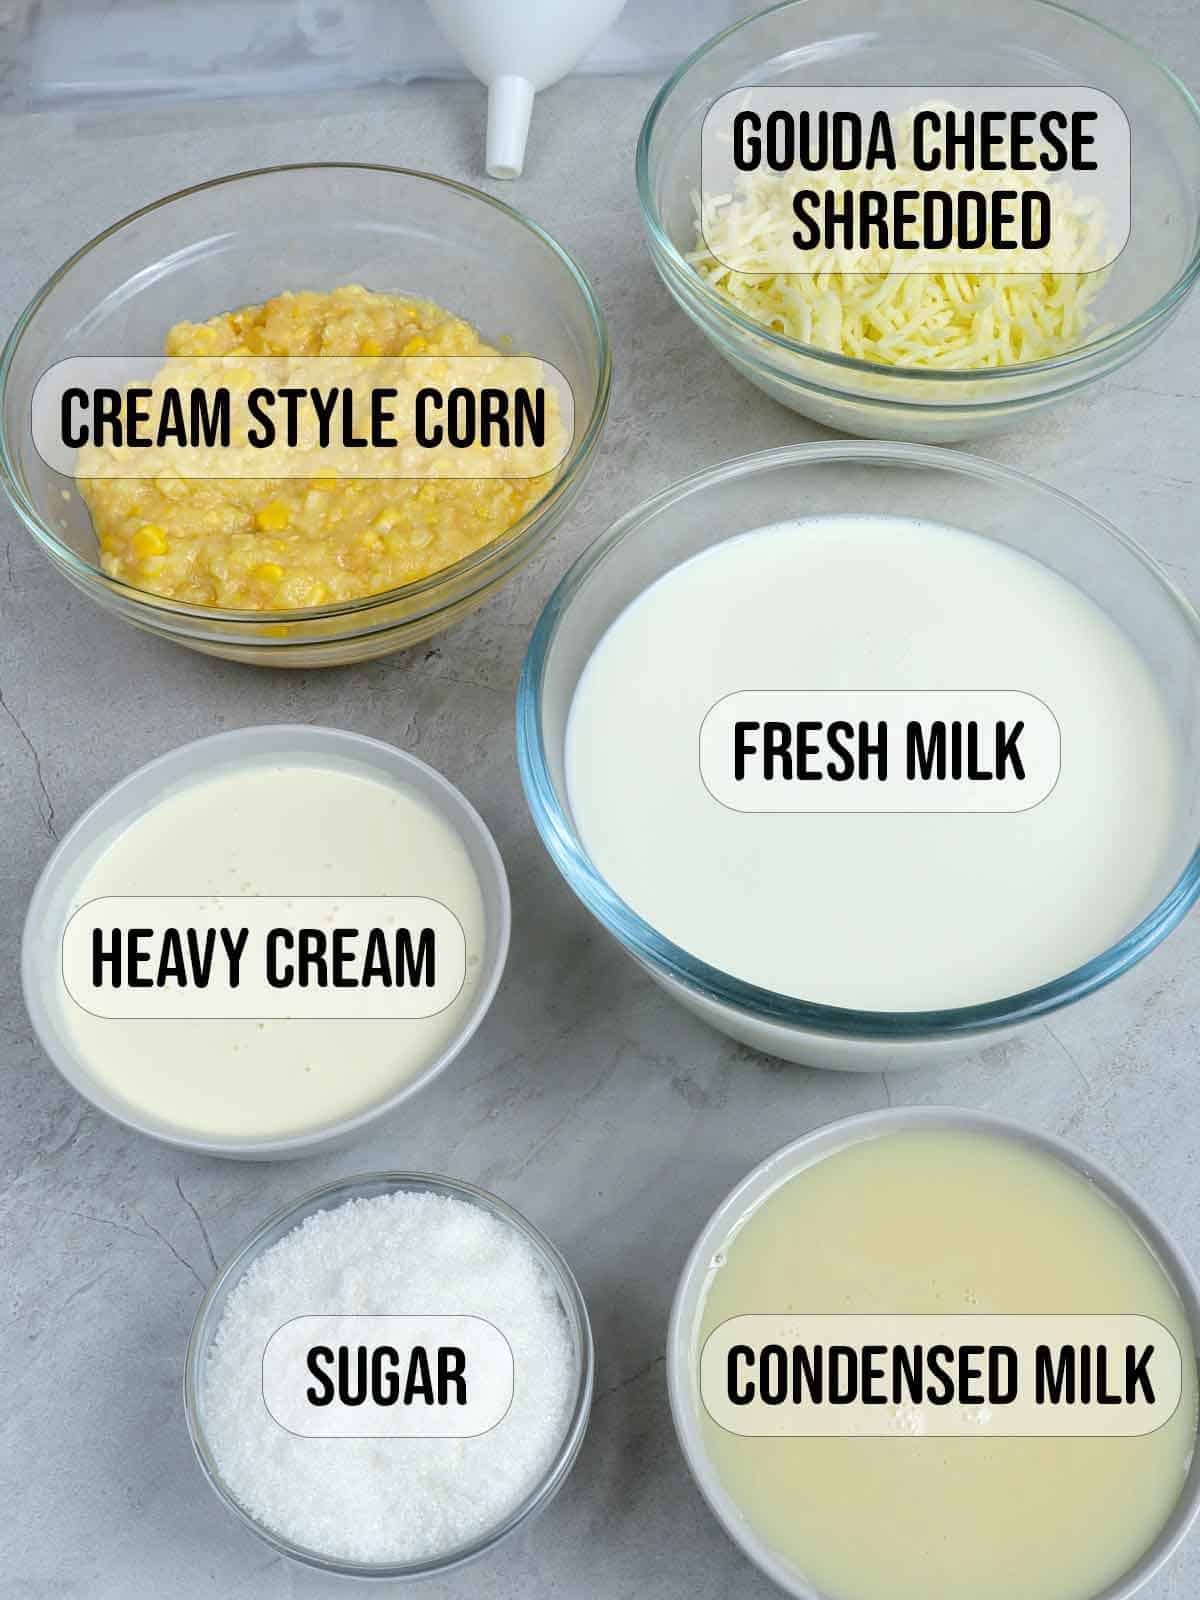 cream style corn, condensed milk, heavy cream, sugar, shredded cheese, whole milk in bowls.